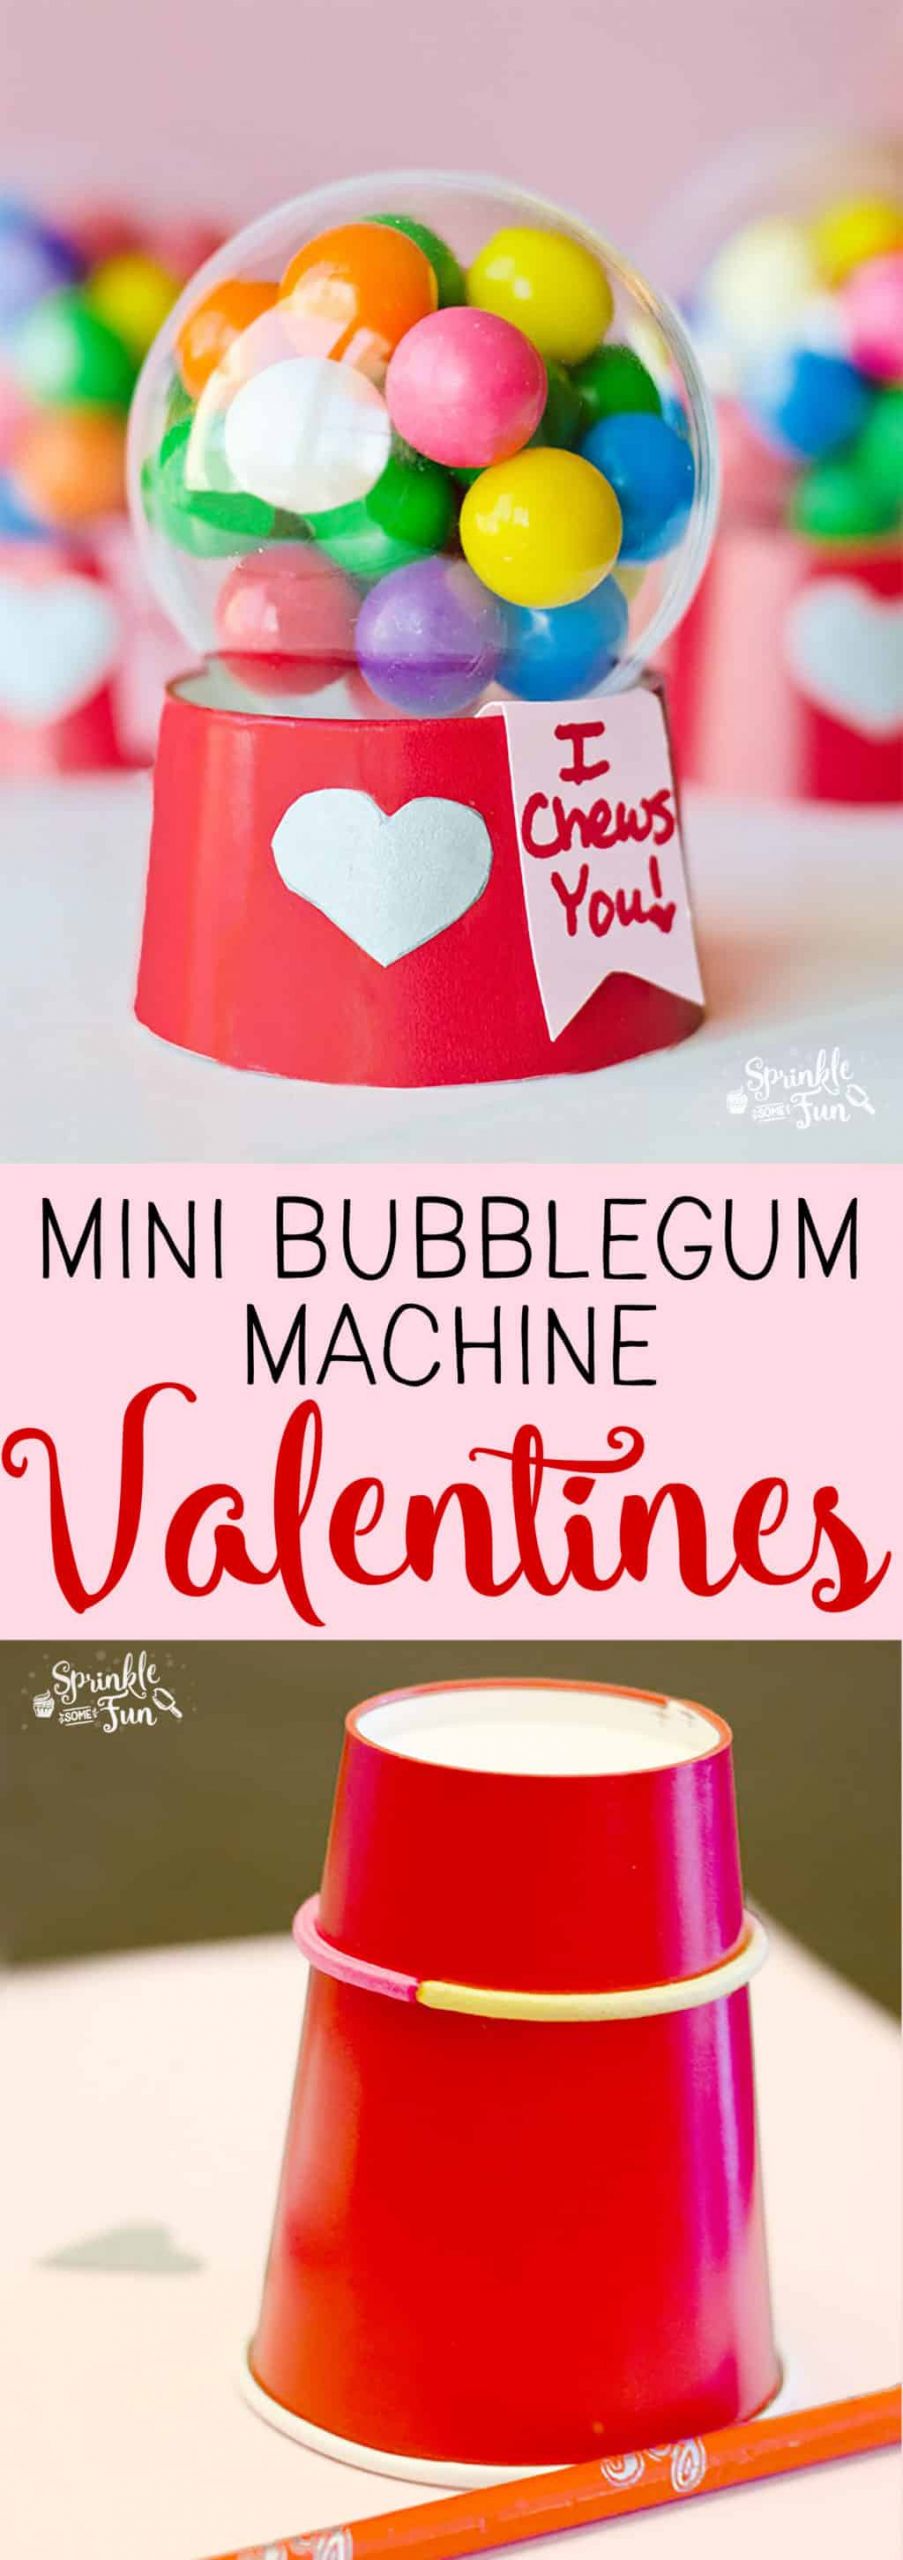 Valentine Day Gift Ideas For Kids
 Mini Bubblegum Machine Valentines